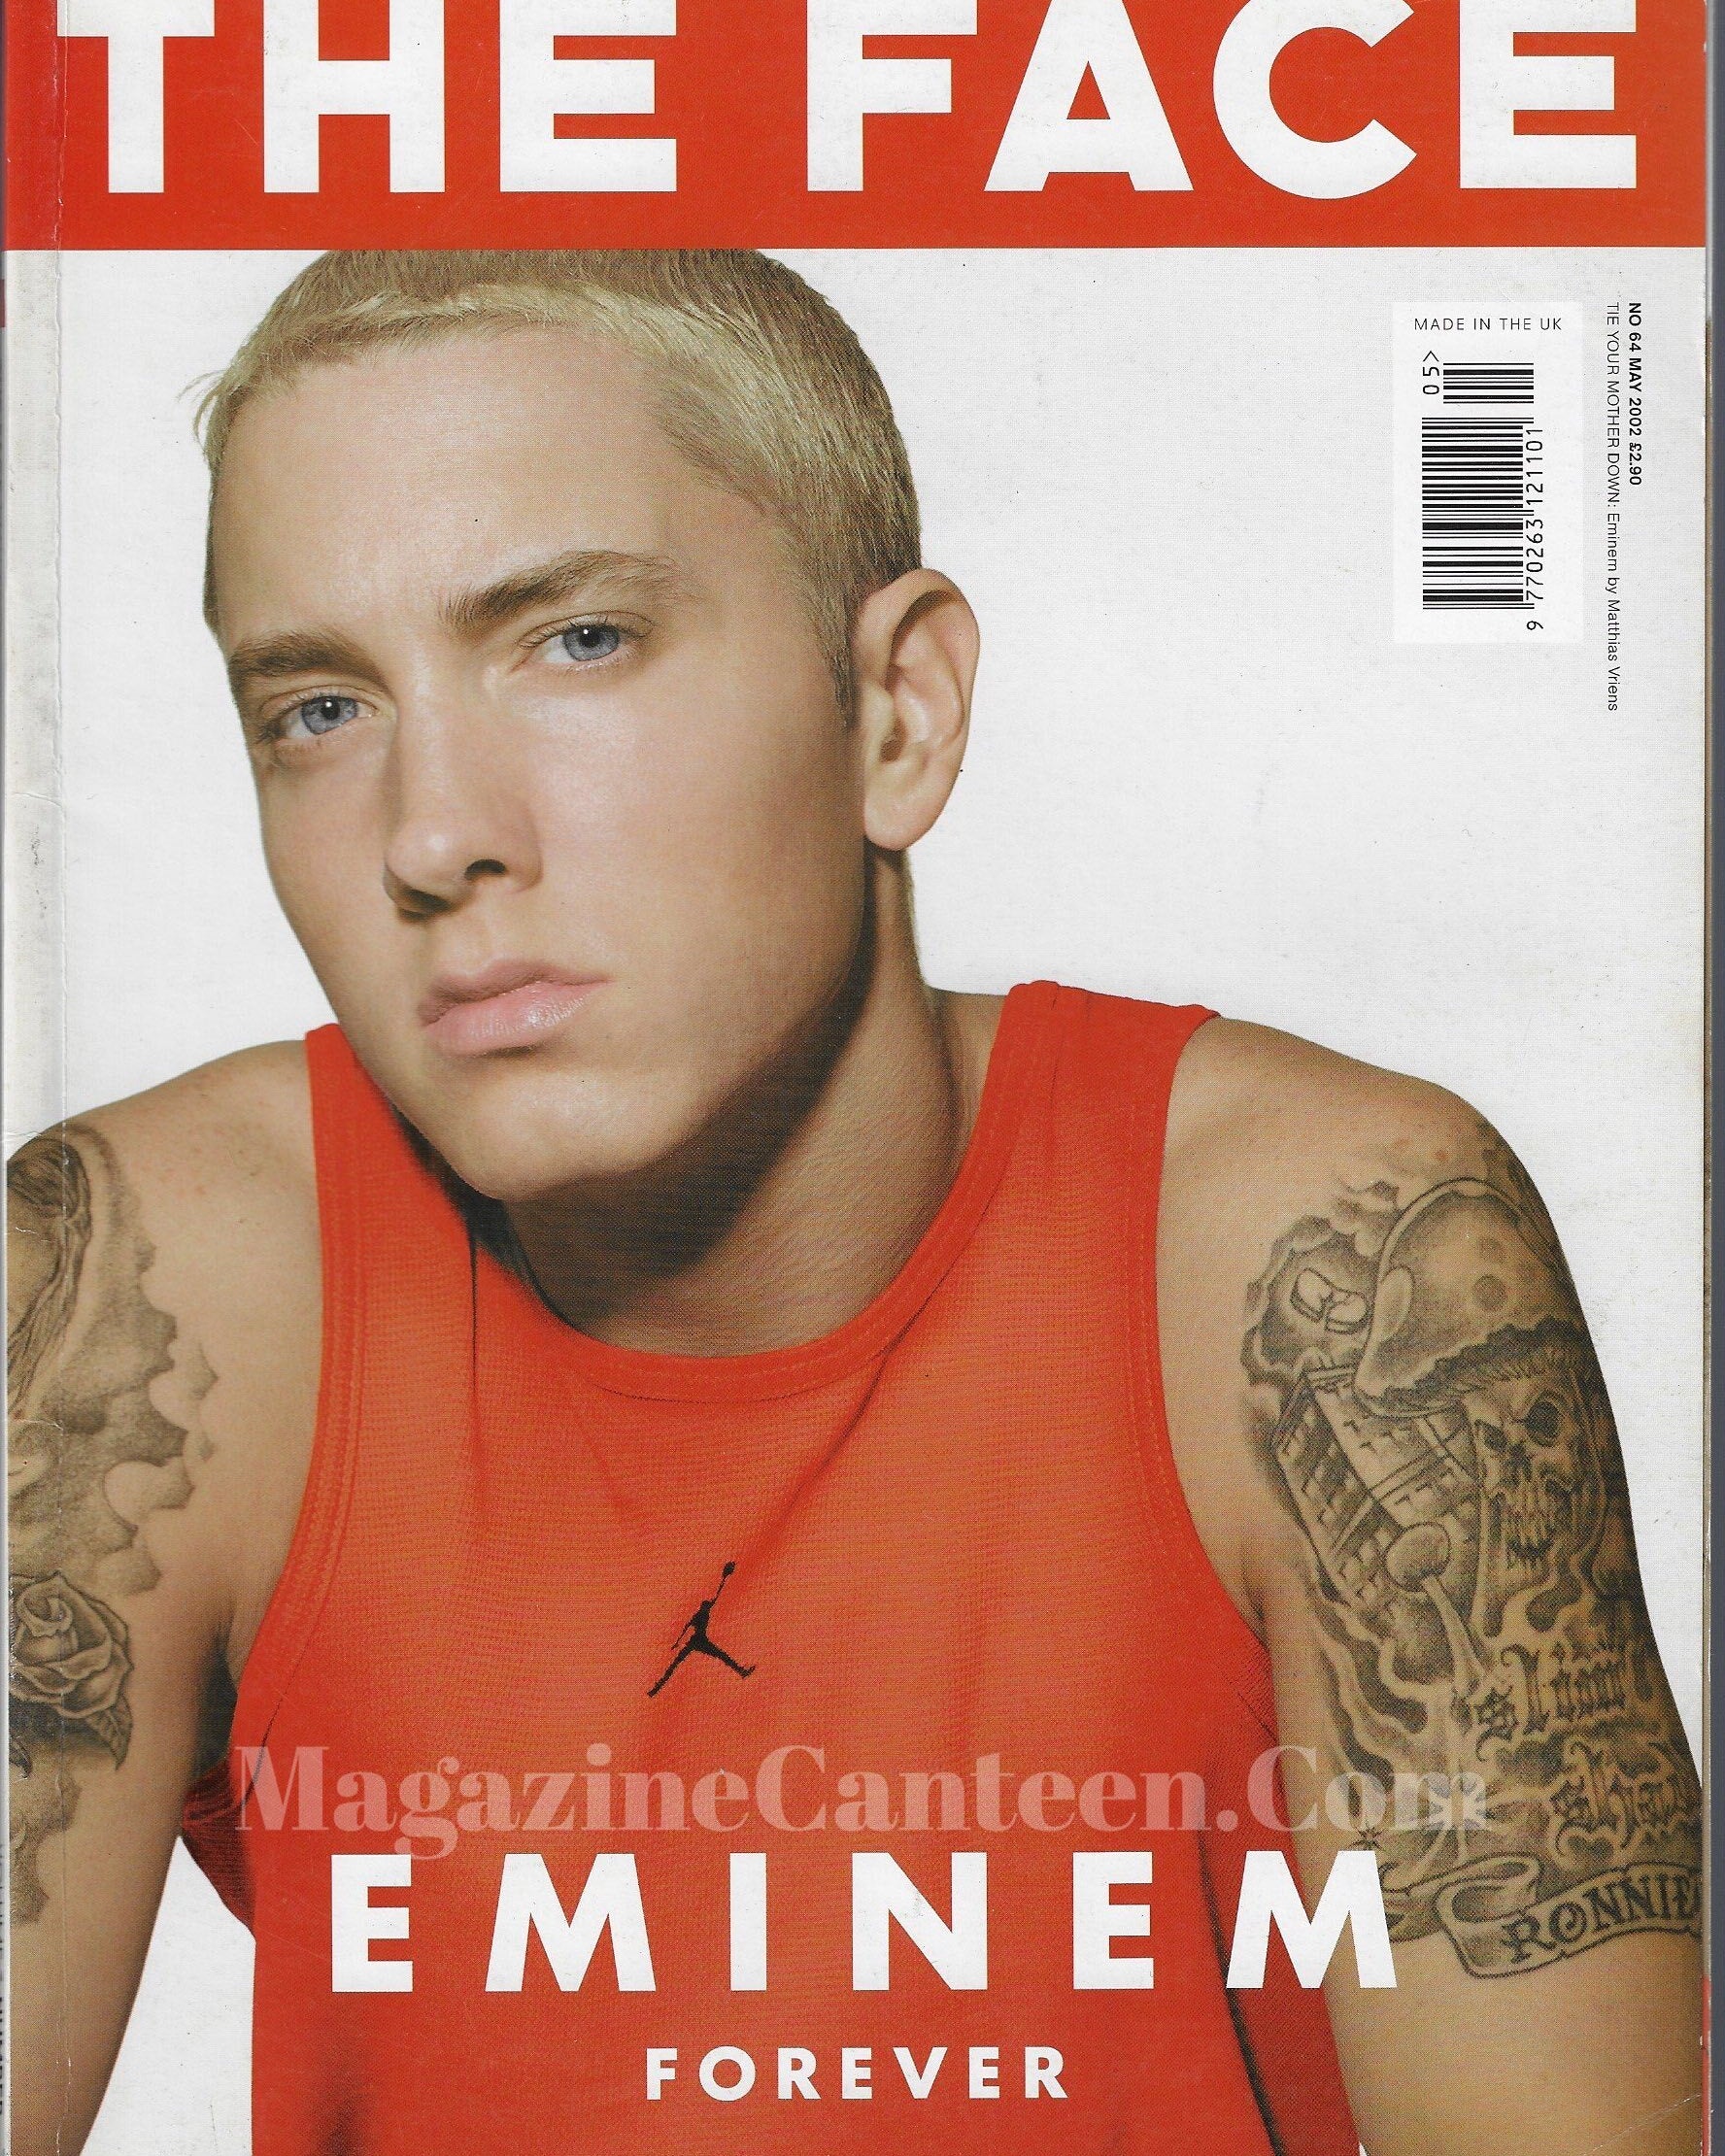 The Face Magazine 2002 - Eminem Red vest